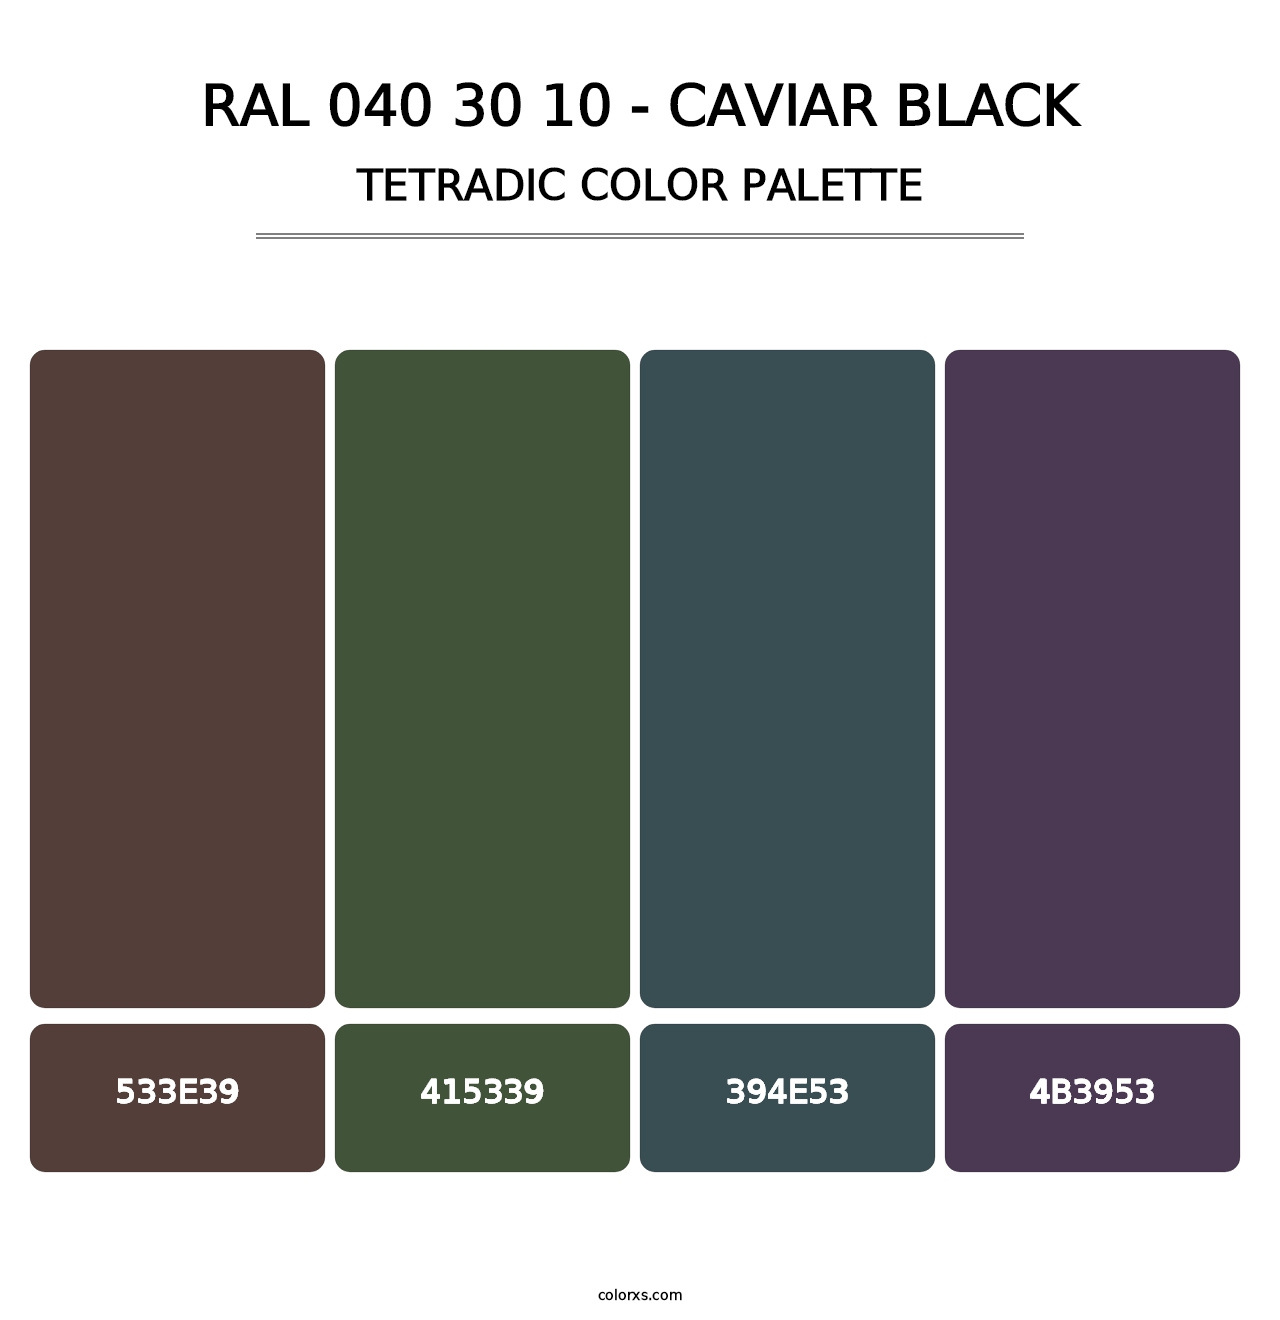 RAL 040 30 10 - Caviar Black - Tetradic Color Palette